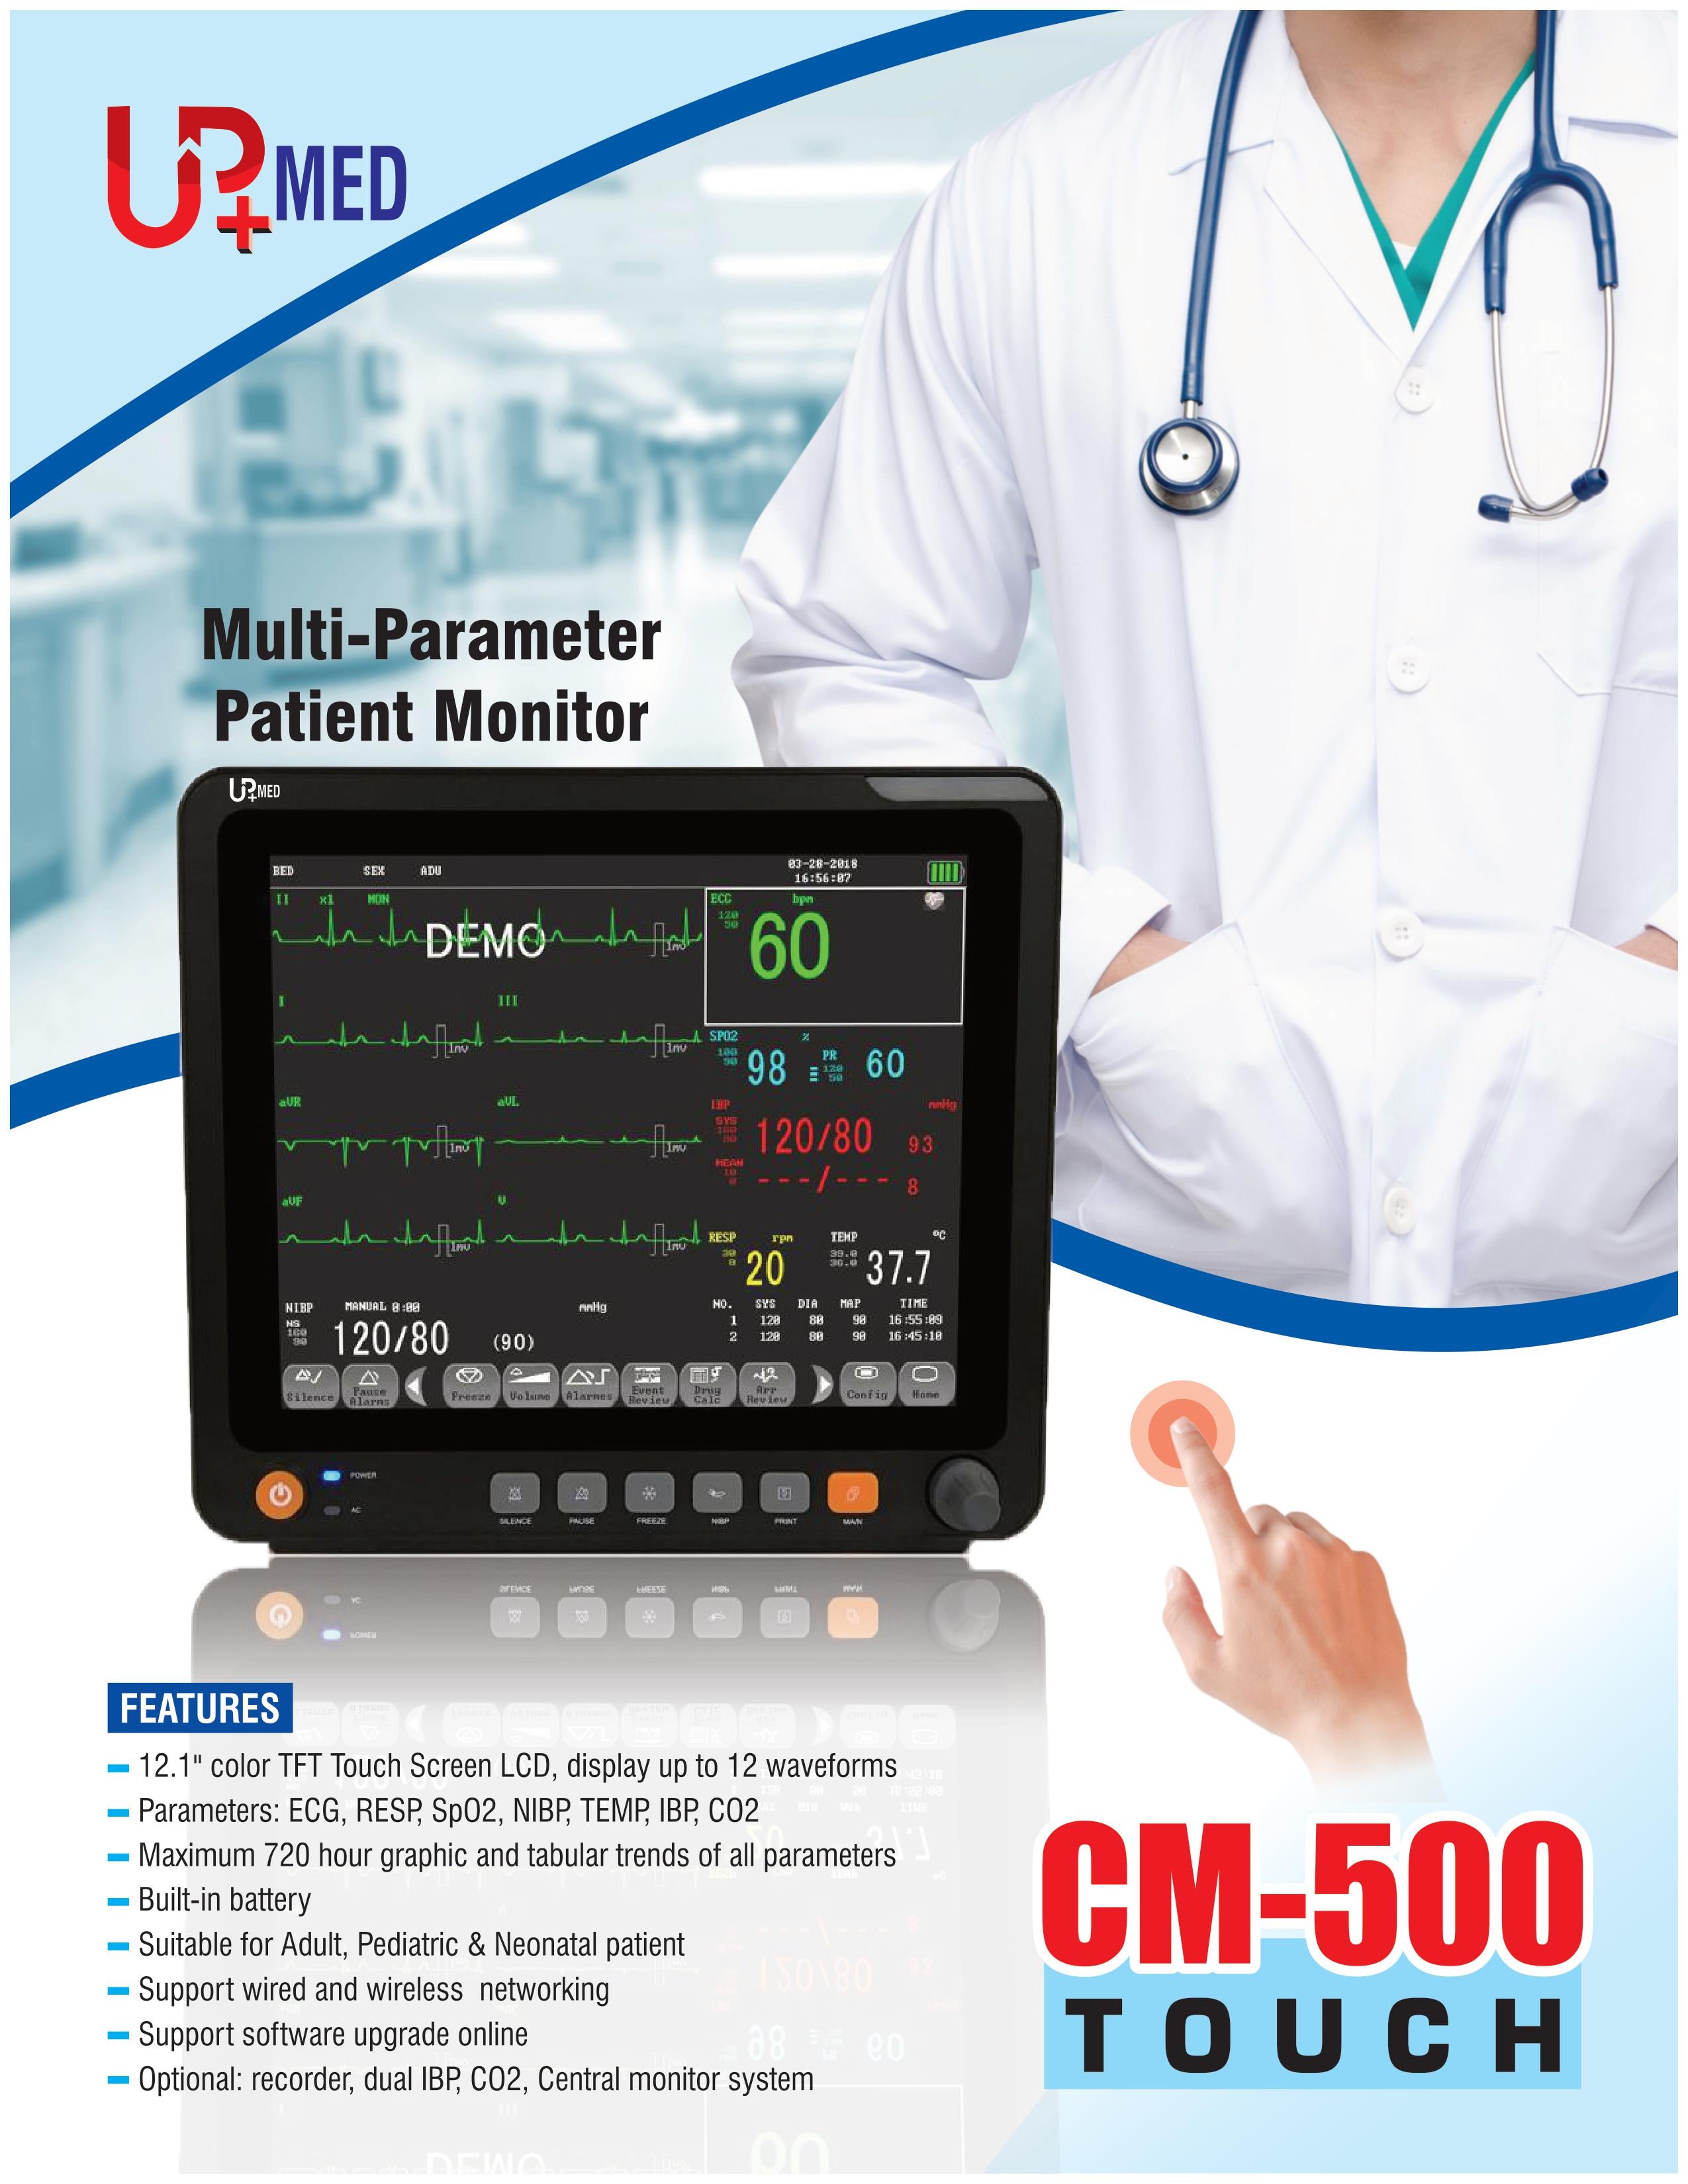 UpMed Multi-Parameter Patient Monitor CM500 in Pakistan - UPmed CM 500 Multi-parameter Patient Monitor in Pakistan